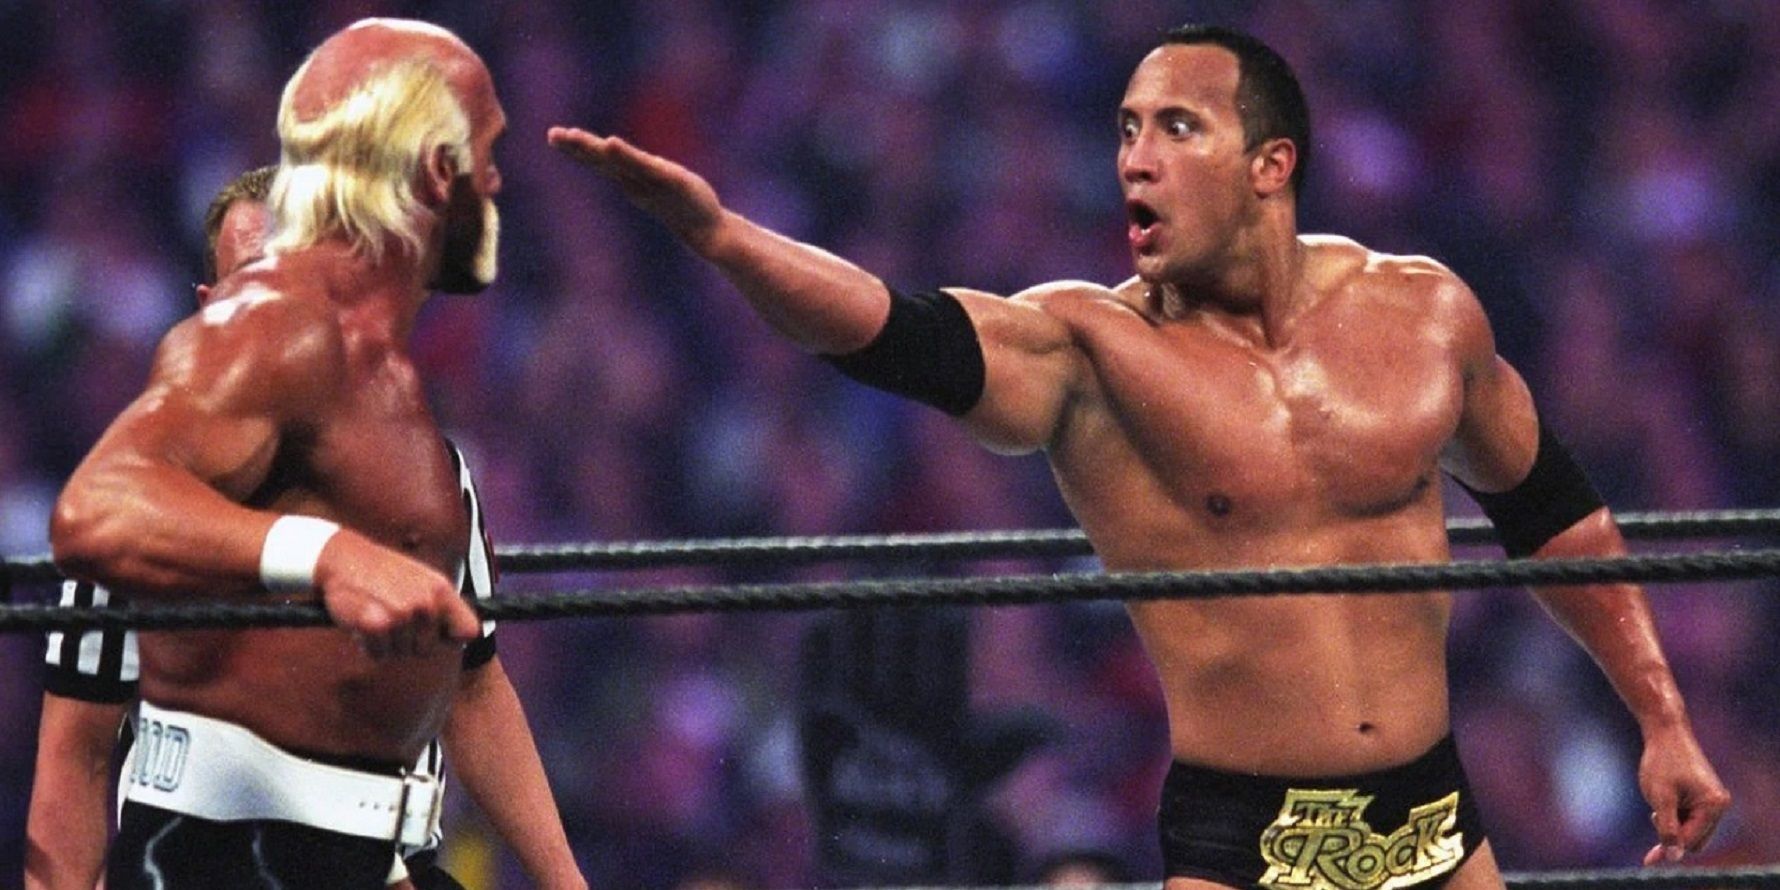 The Rock vs. Hulk Hogan From Wrestlemania 18